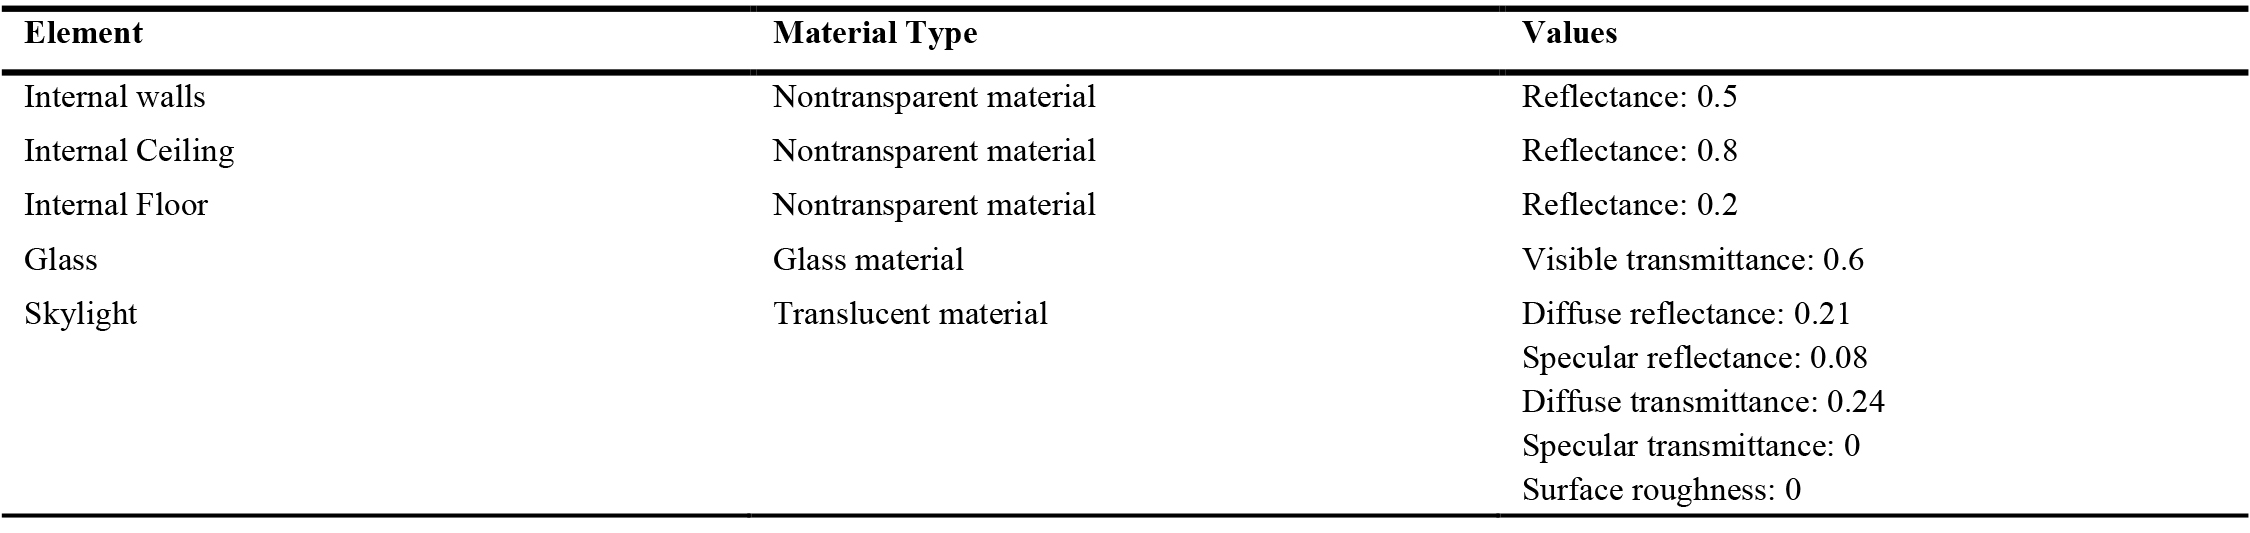 Building material optical attributes [84].